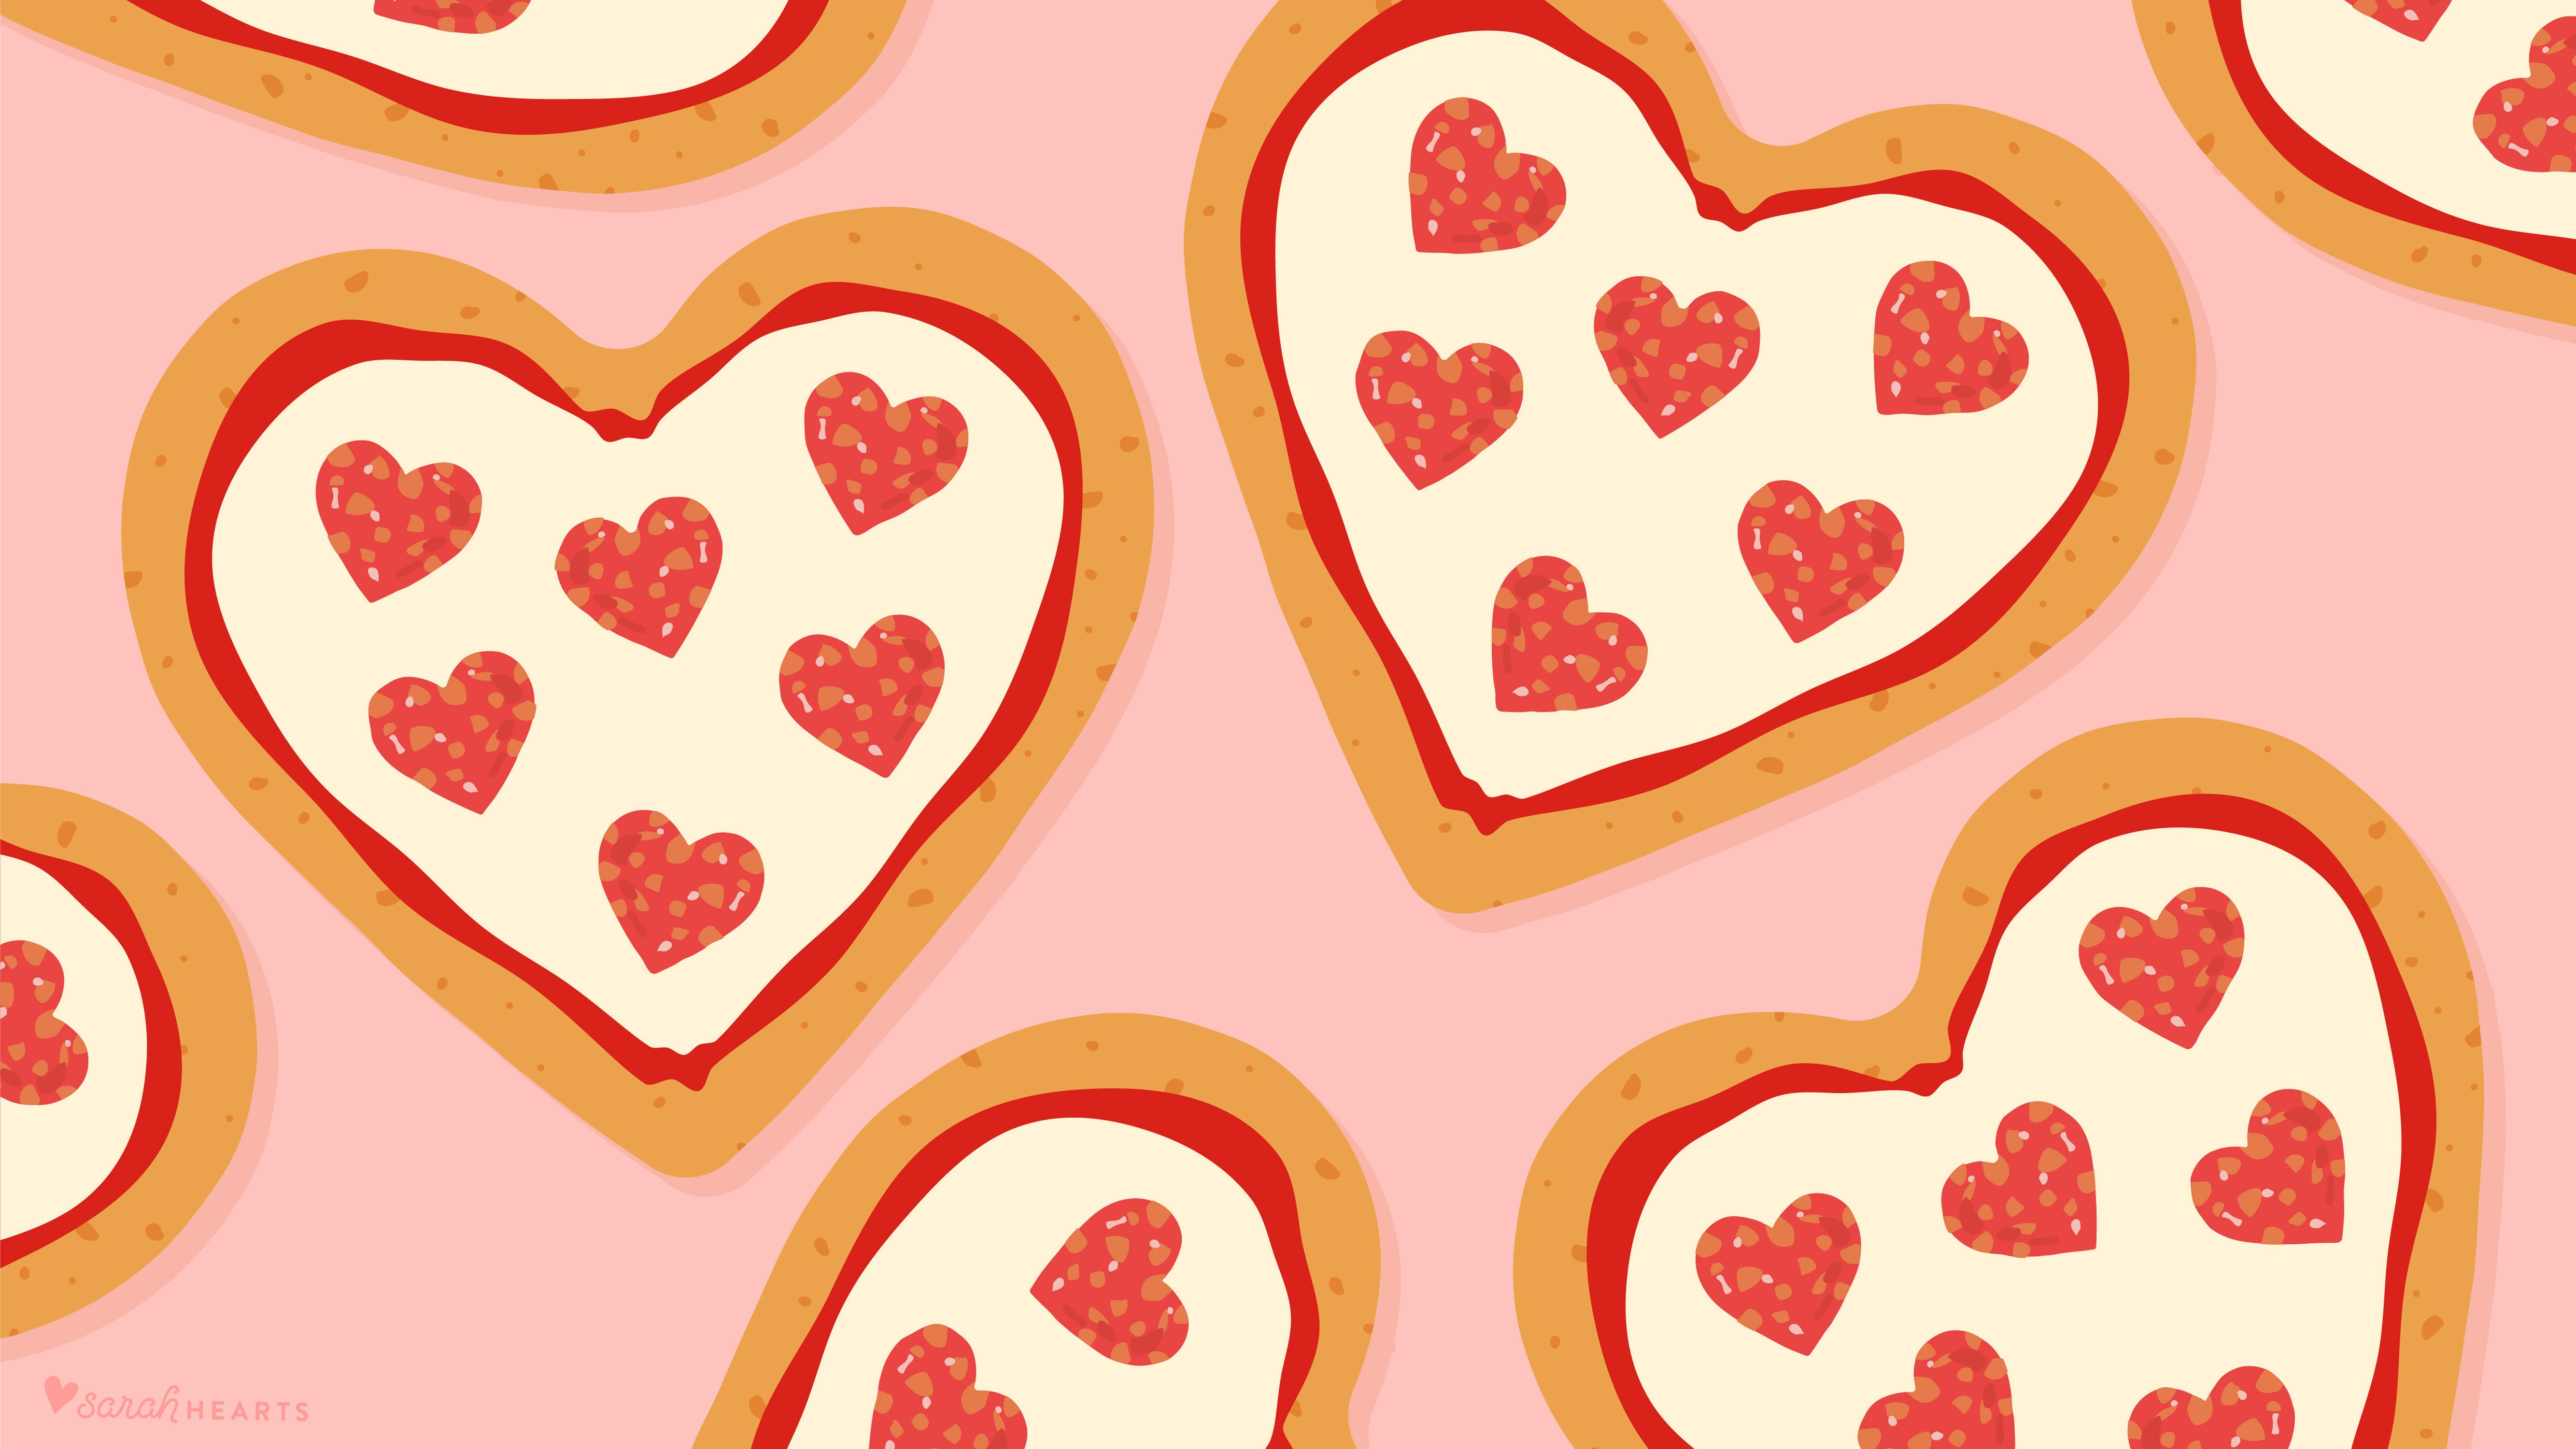 Heart Shaped Pizza February 2018 Calendar Wallpaper